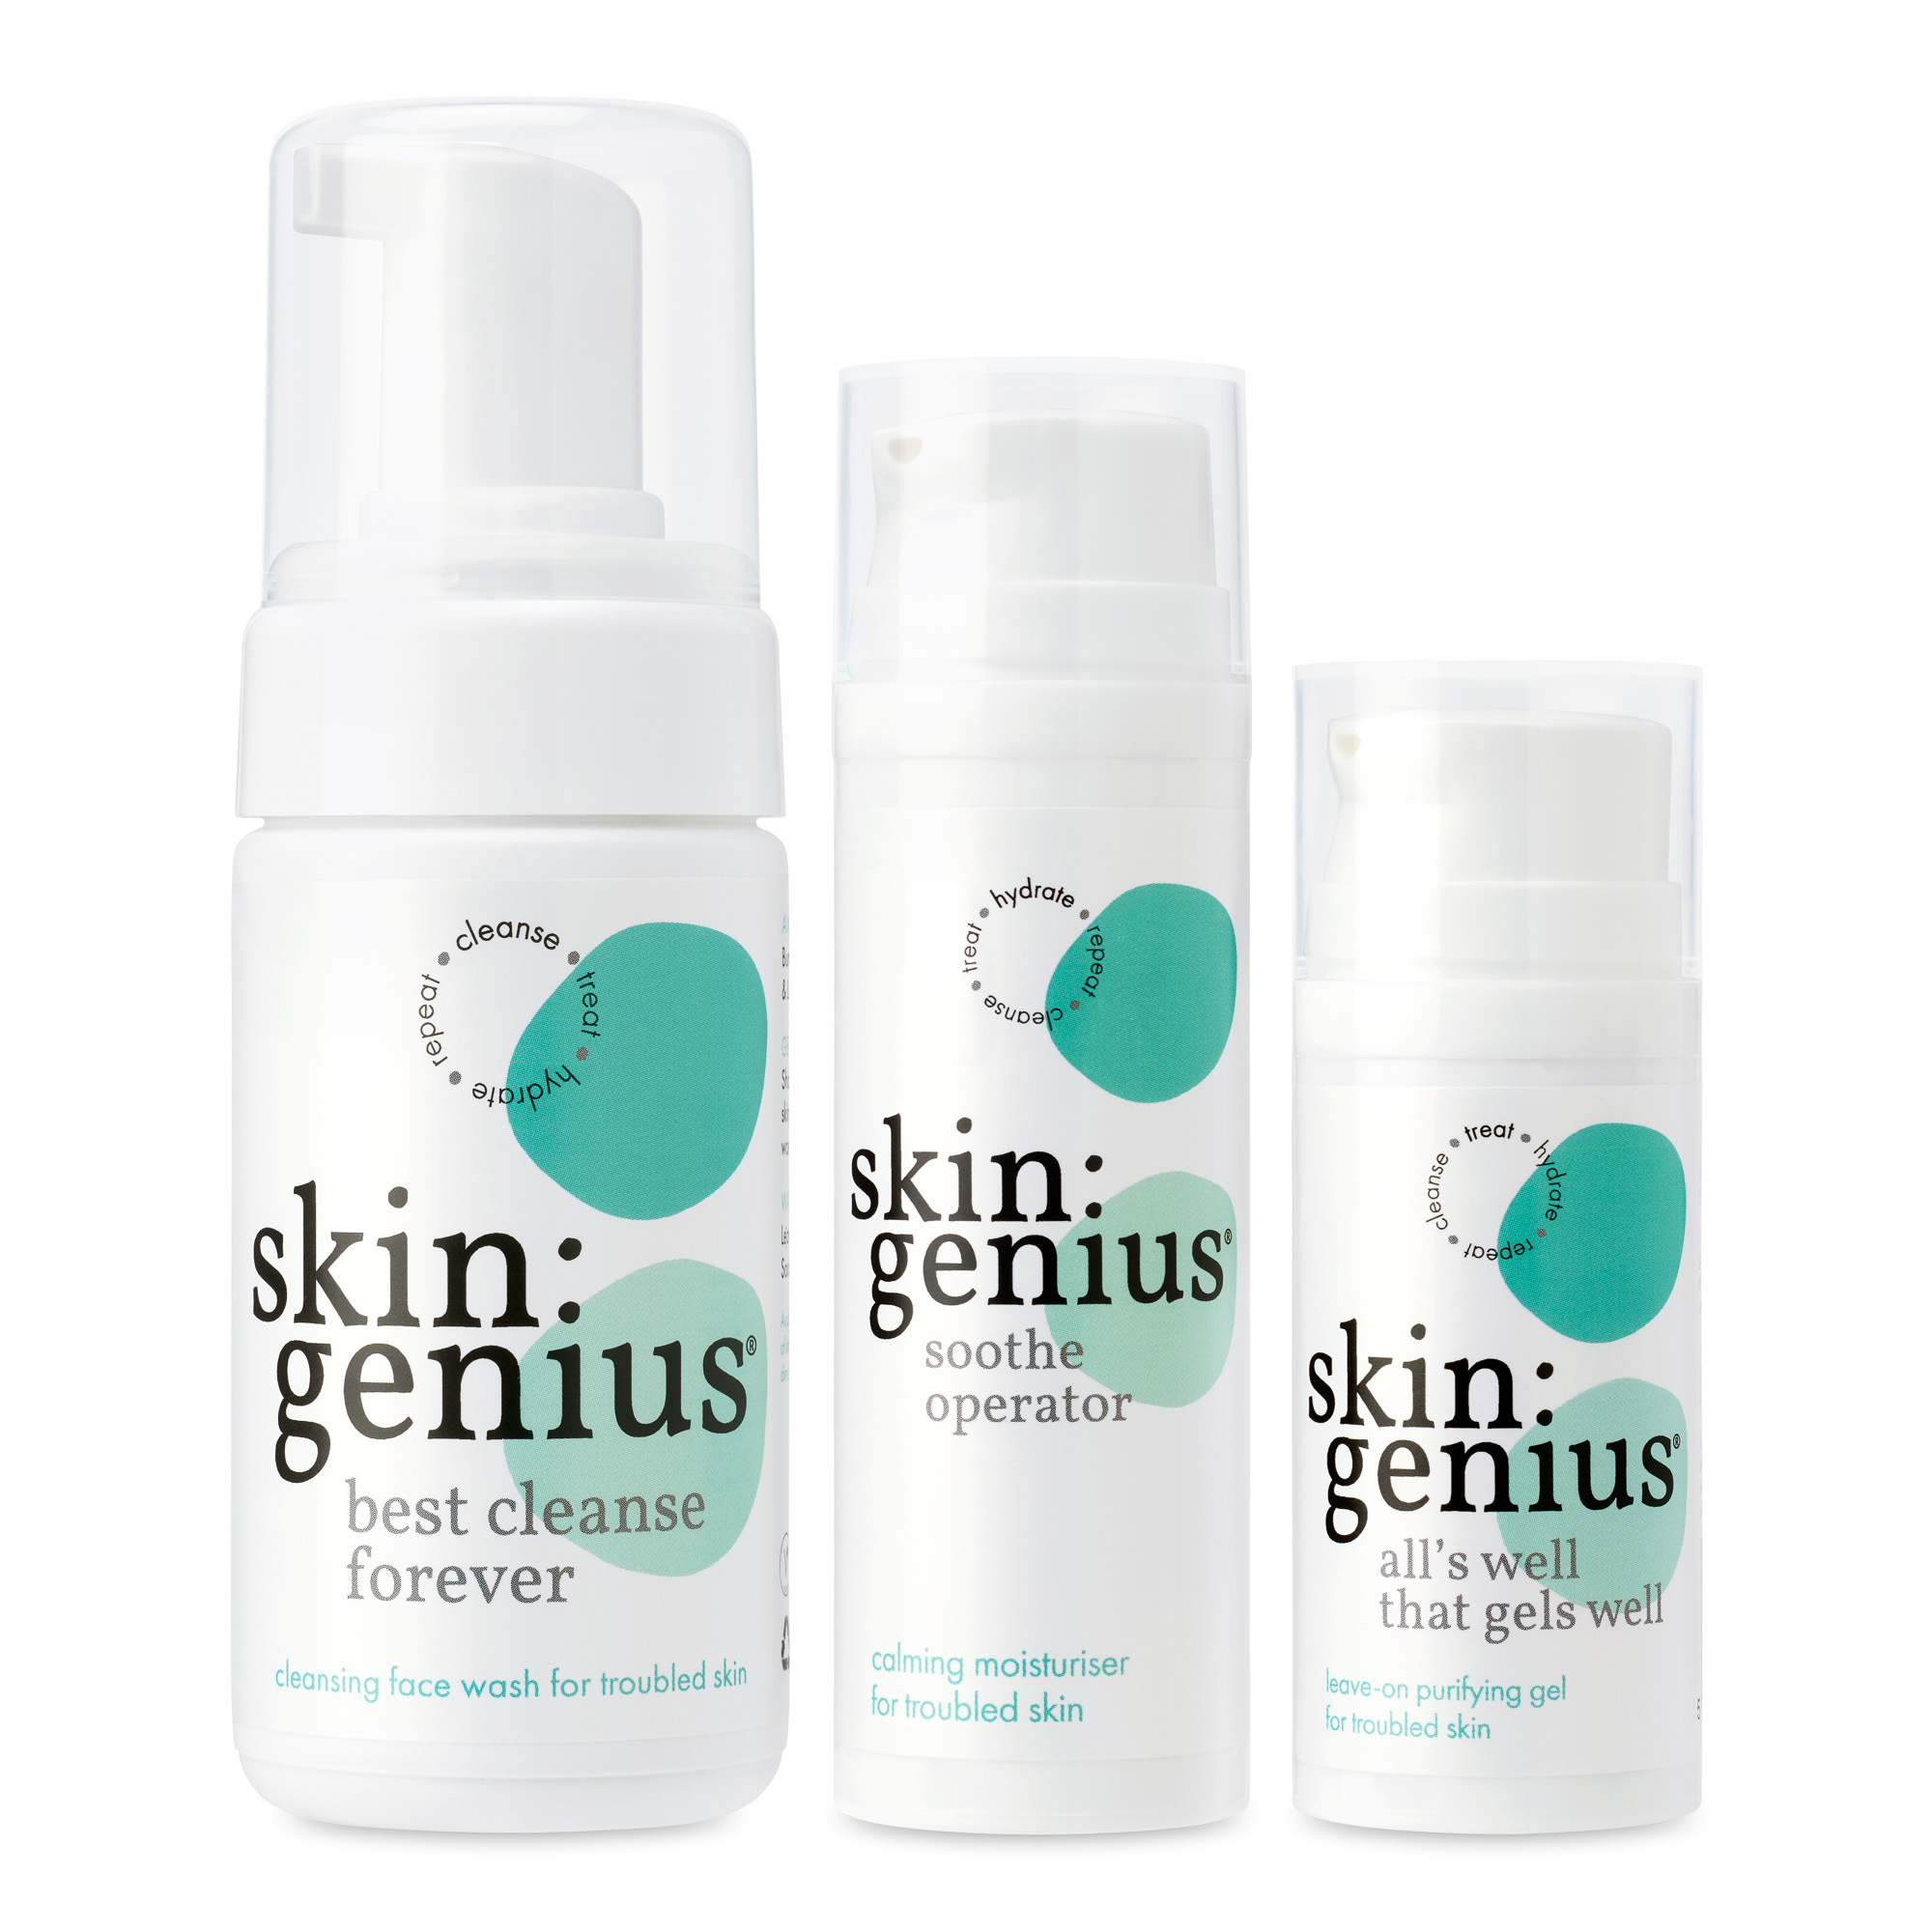 Product Review – SkinGenius – Soothing Moisturiser